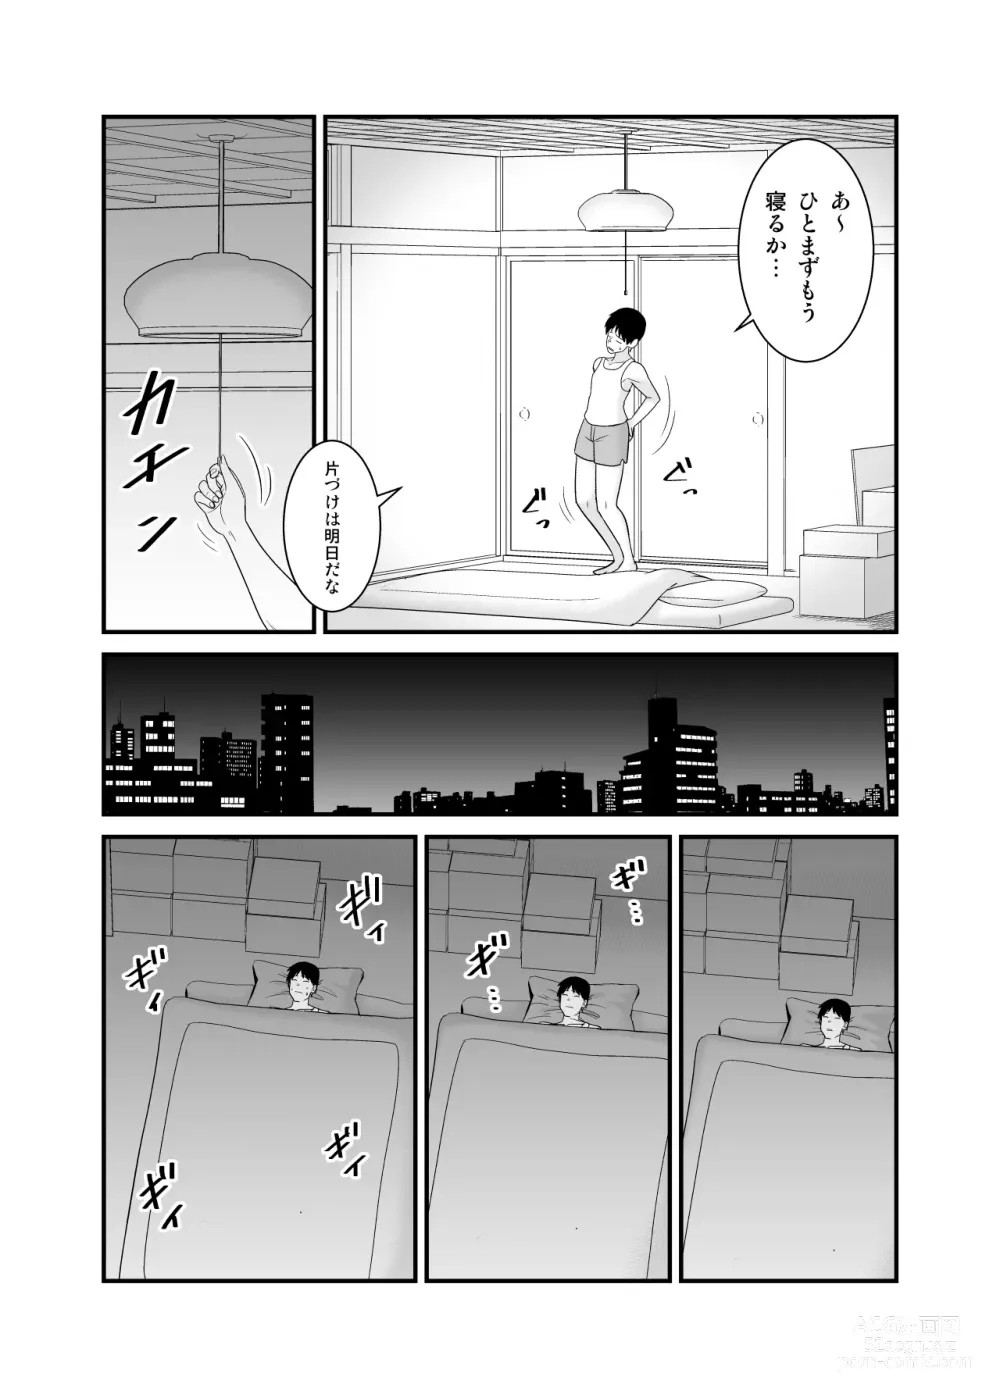 Page 6 of doujinshi ヤバい事故物件に女幽霊が出たけど無職底辺の俺はセックスしまくる